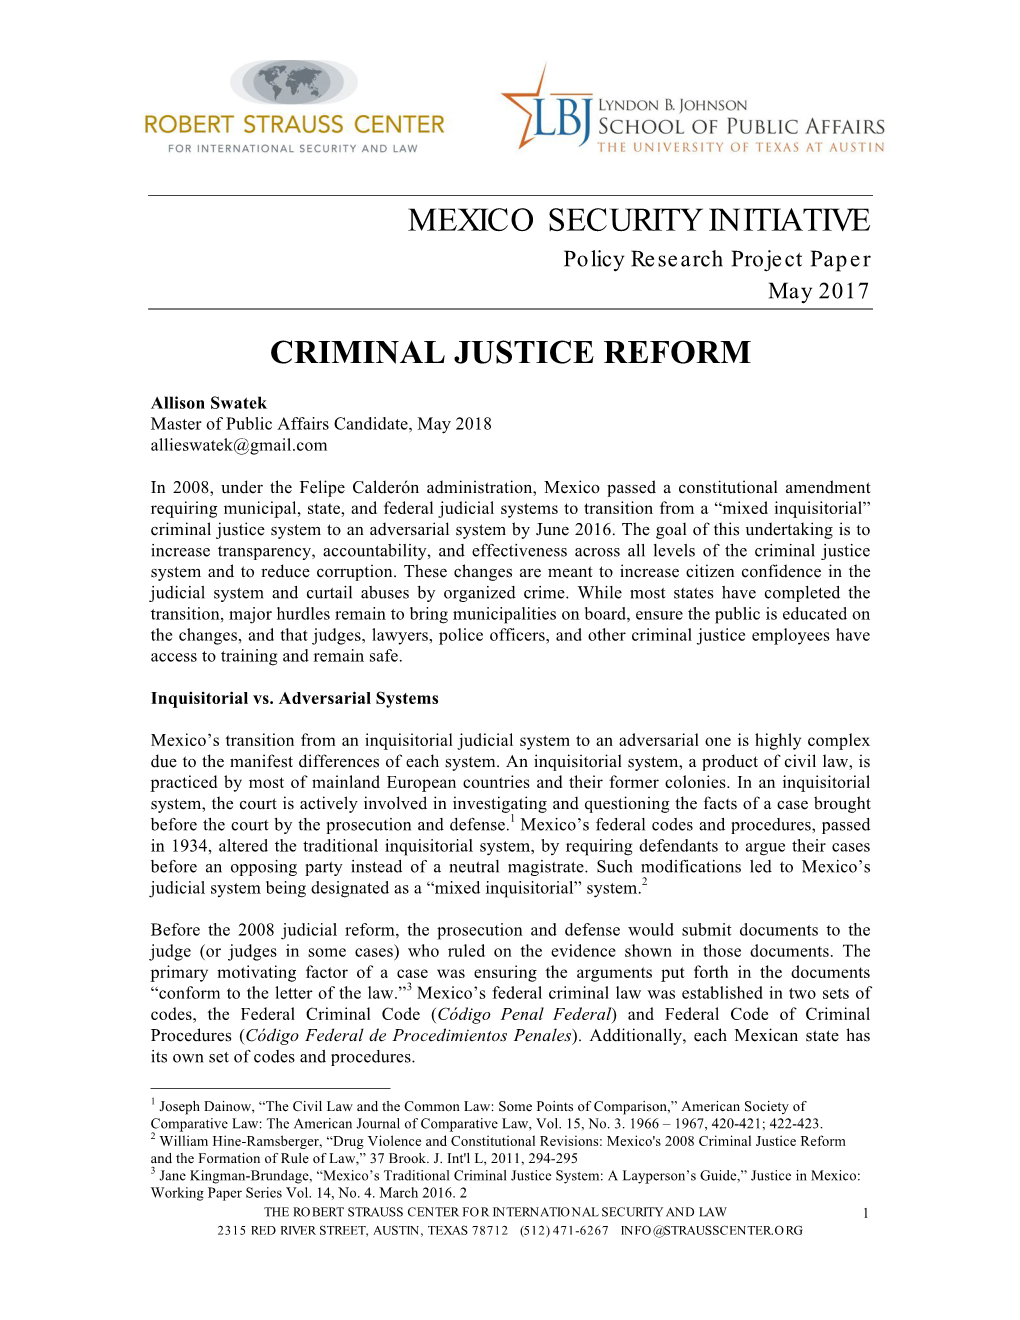 Mexico Security Initiative Criminal Justice Reform